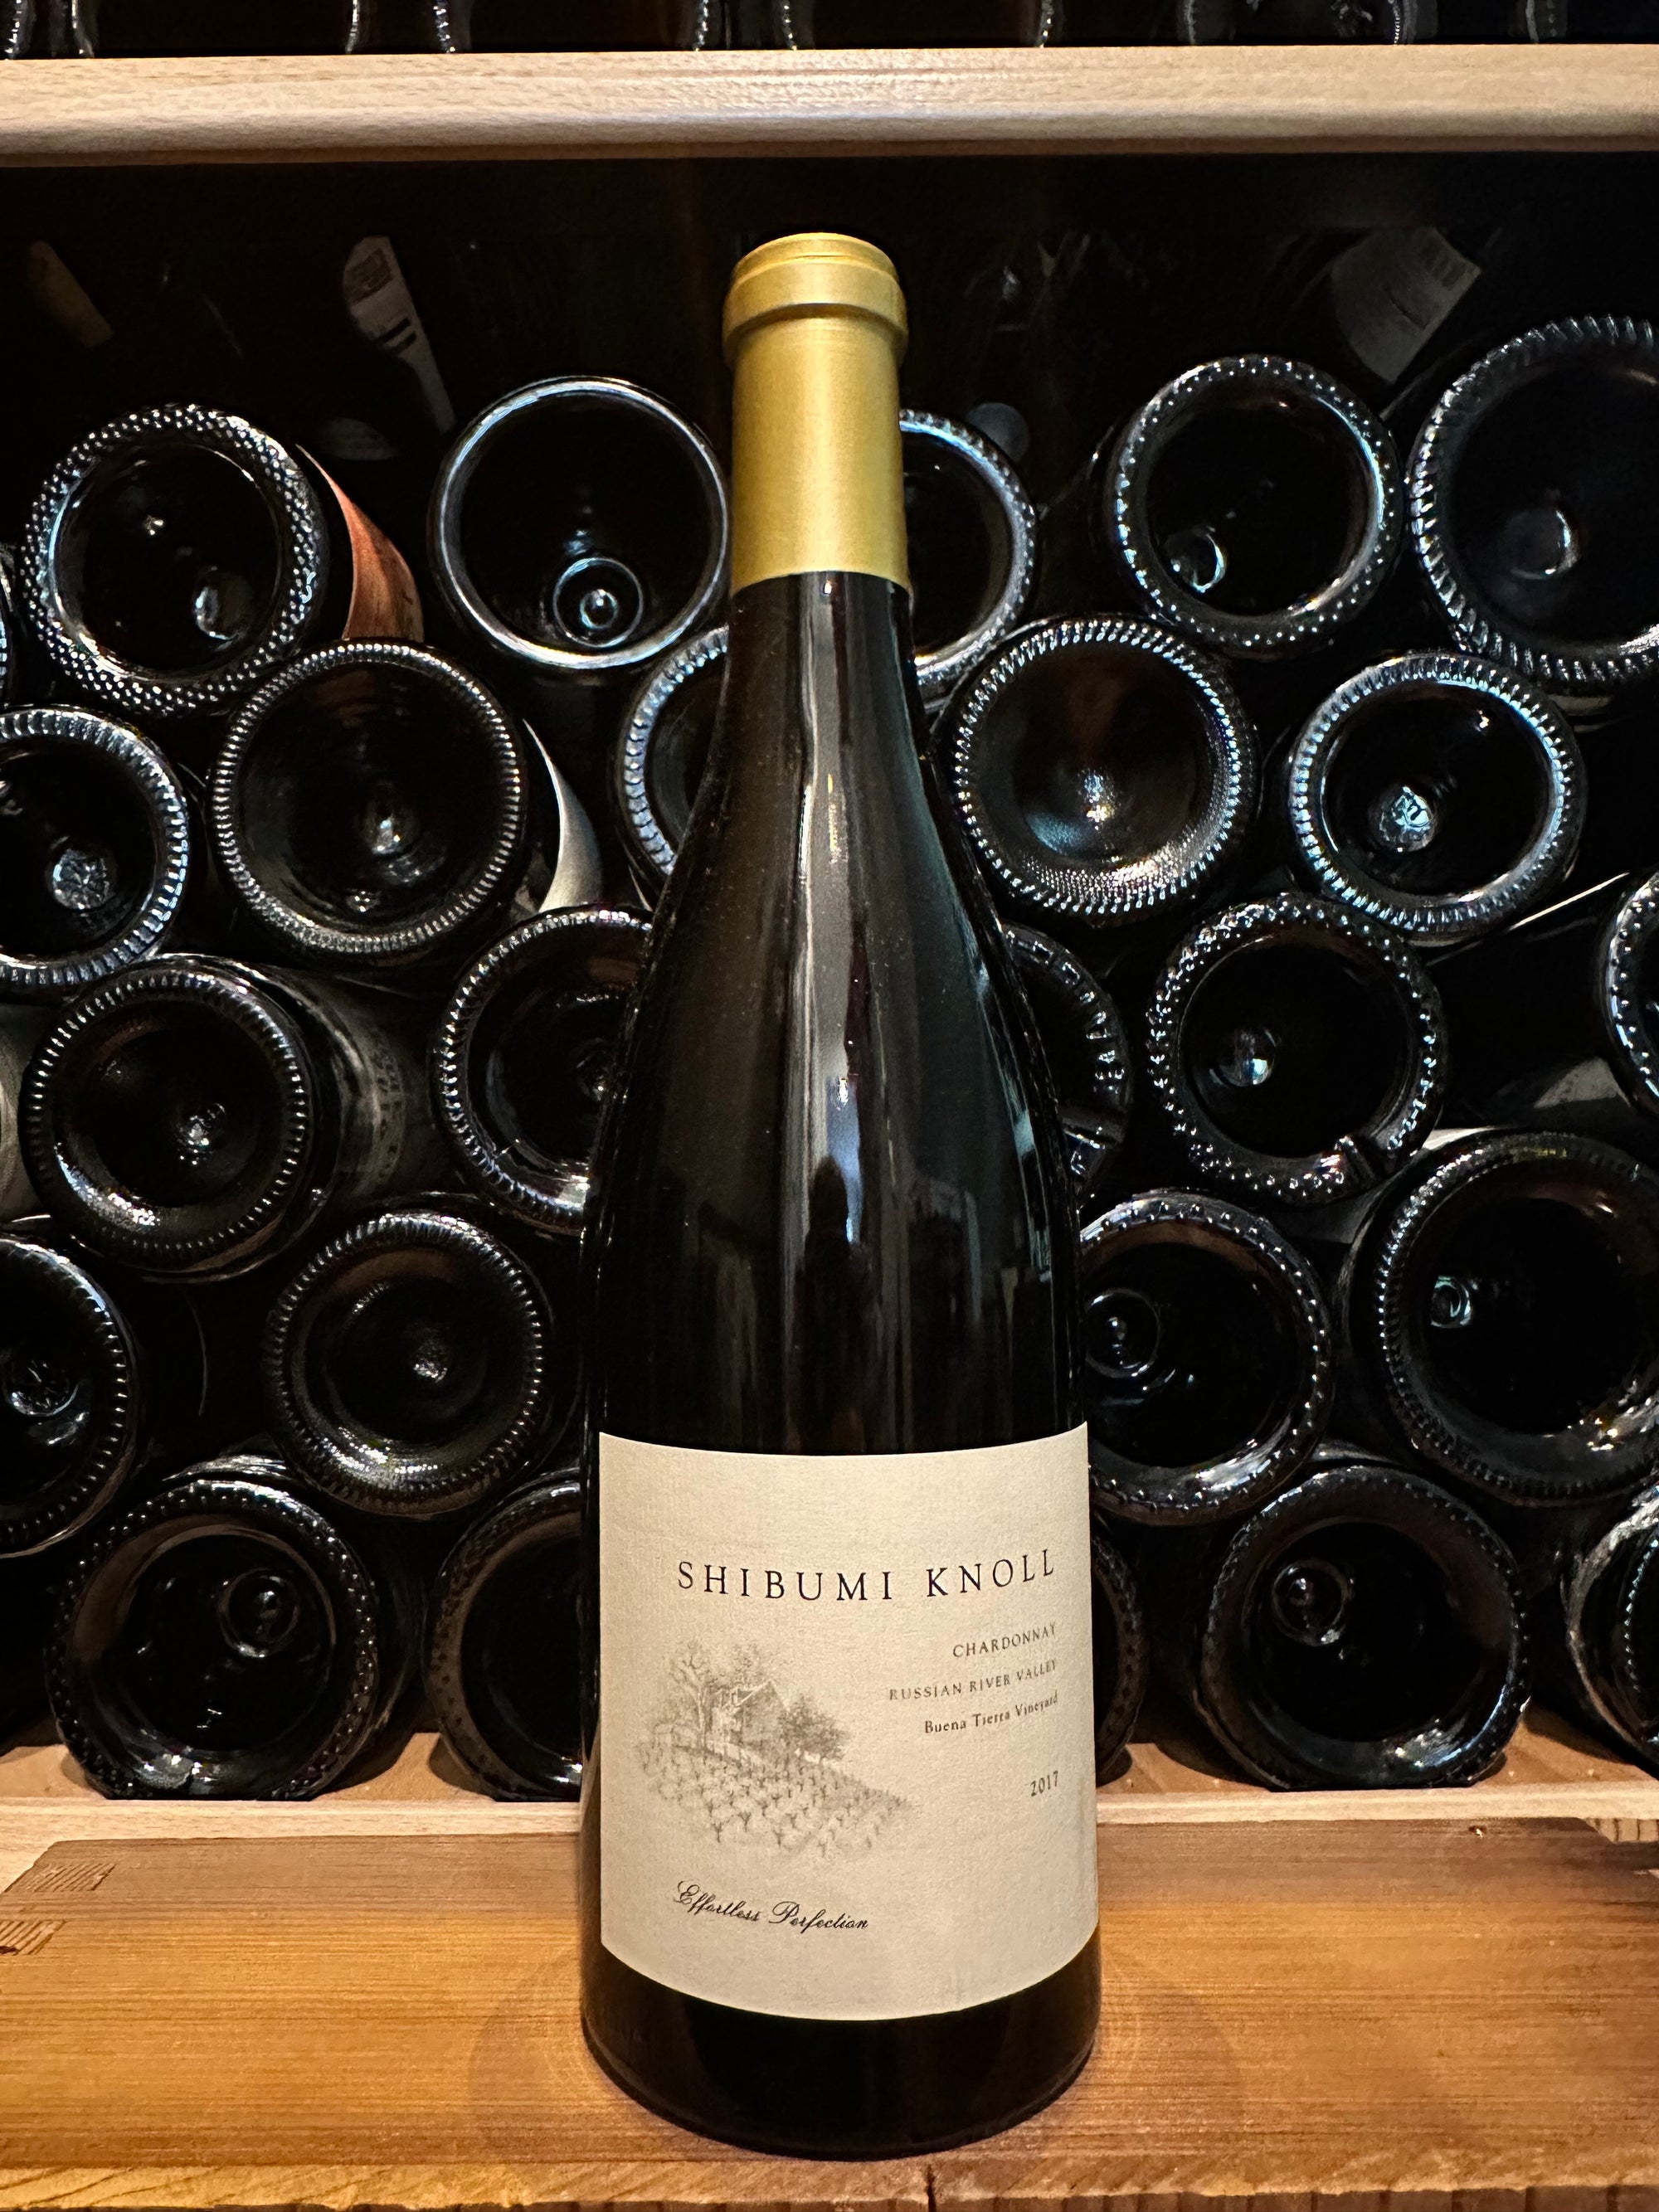 Shibumi Knoll Buena Tierra Vineyard Chardonnay 2017